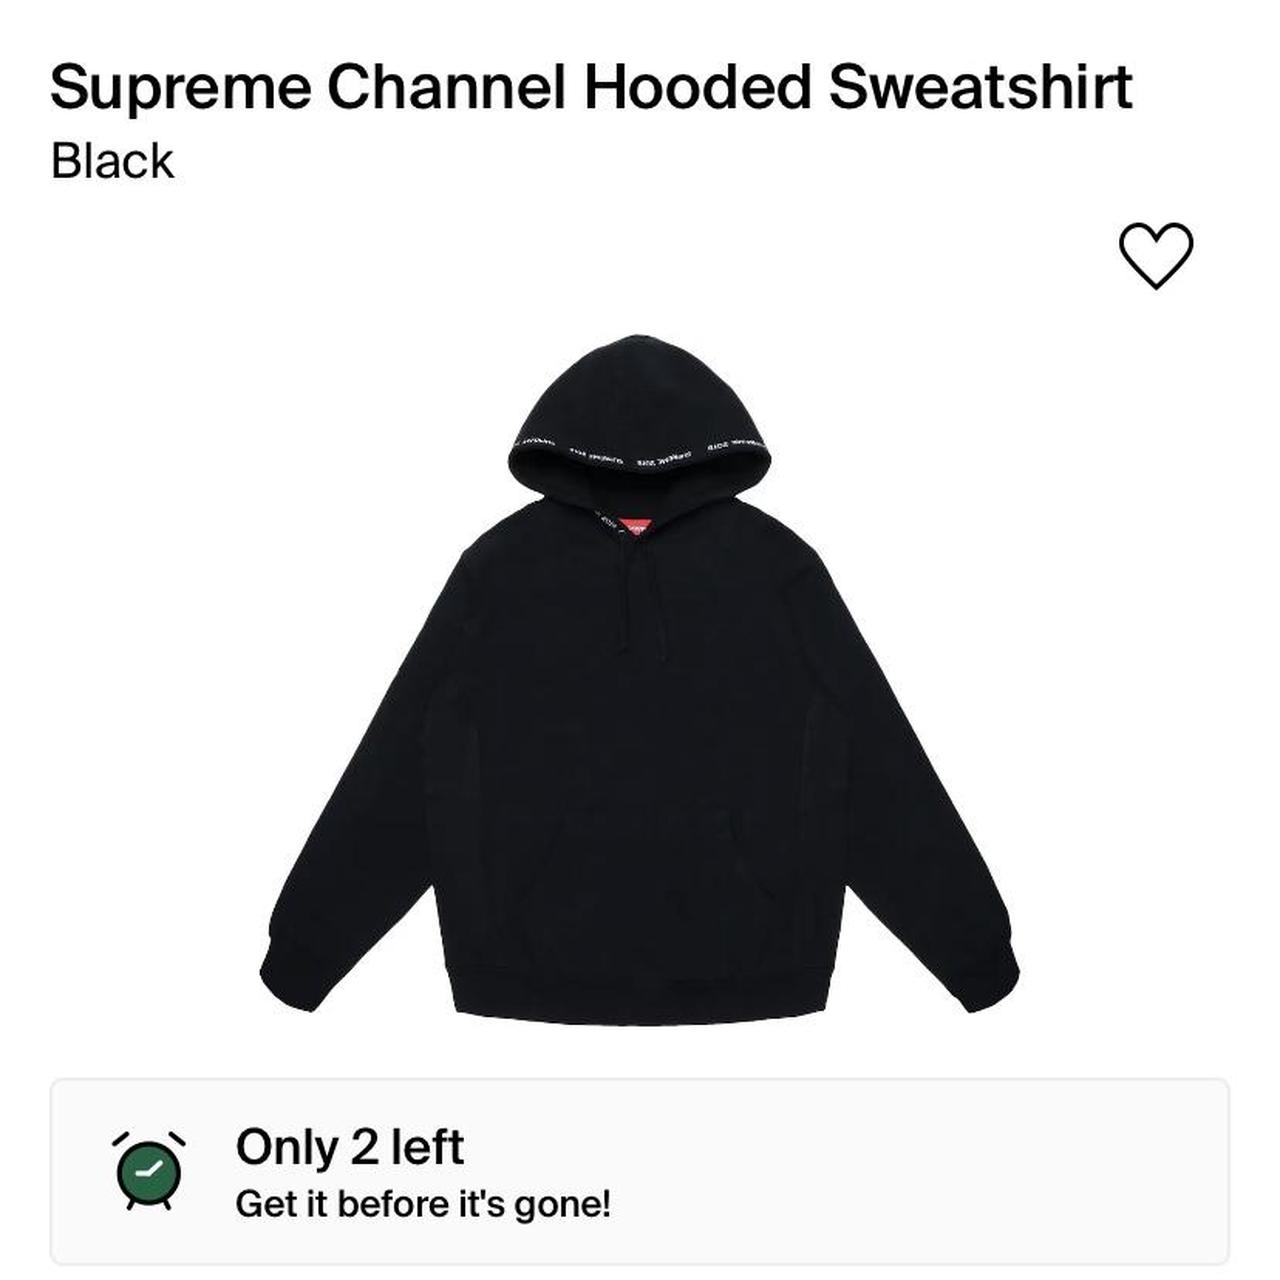 Supreme channel hooded sweatshirt black 2018, worn... - Depop